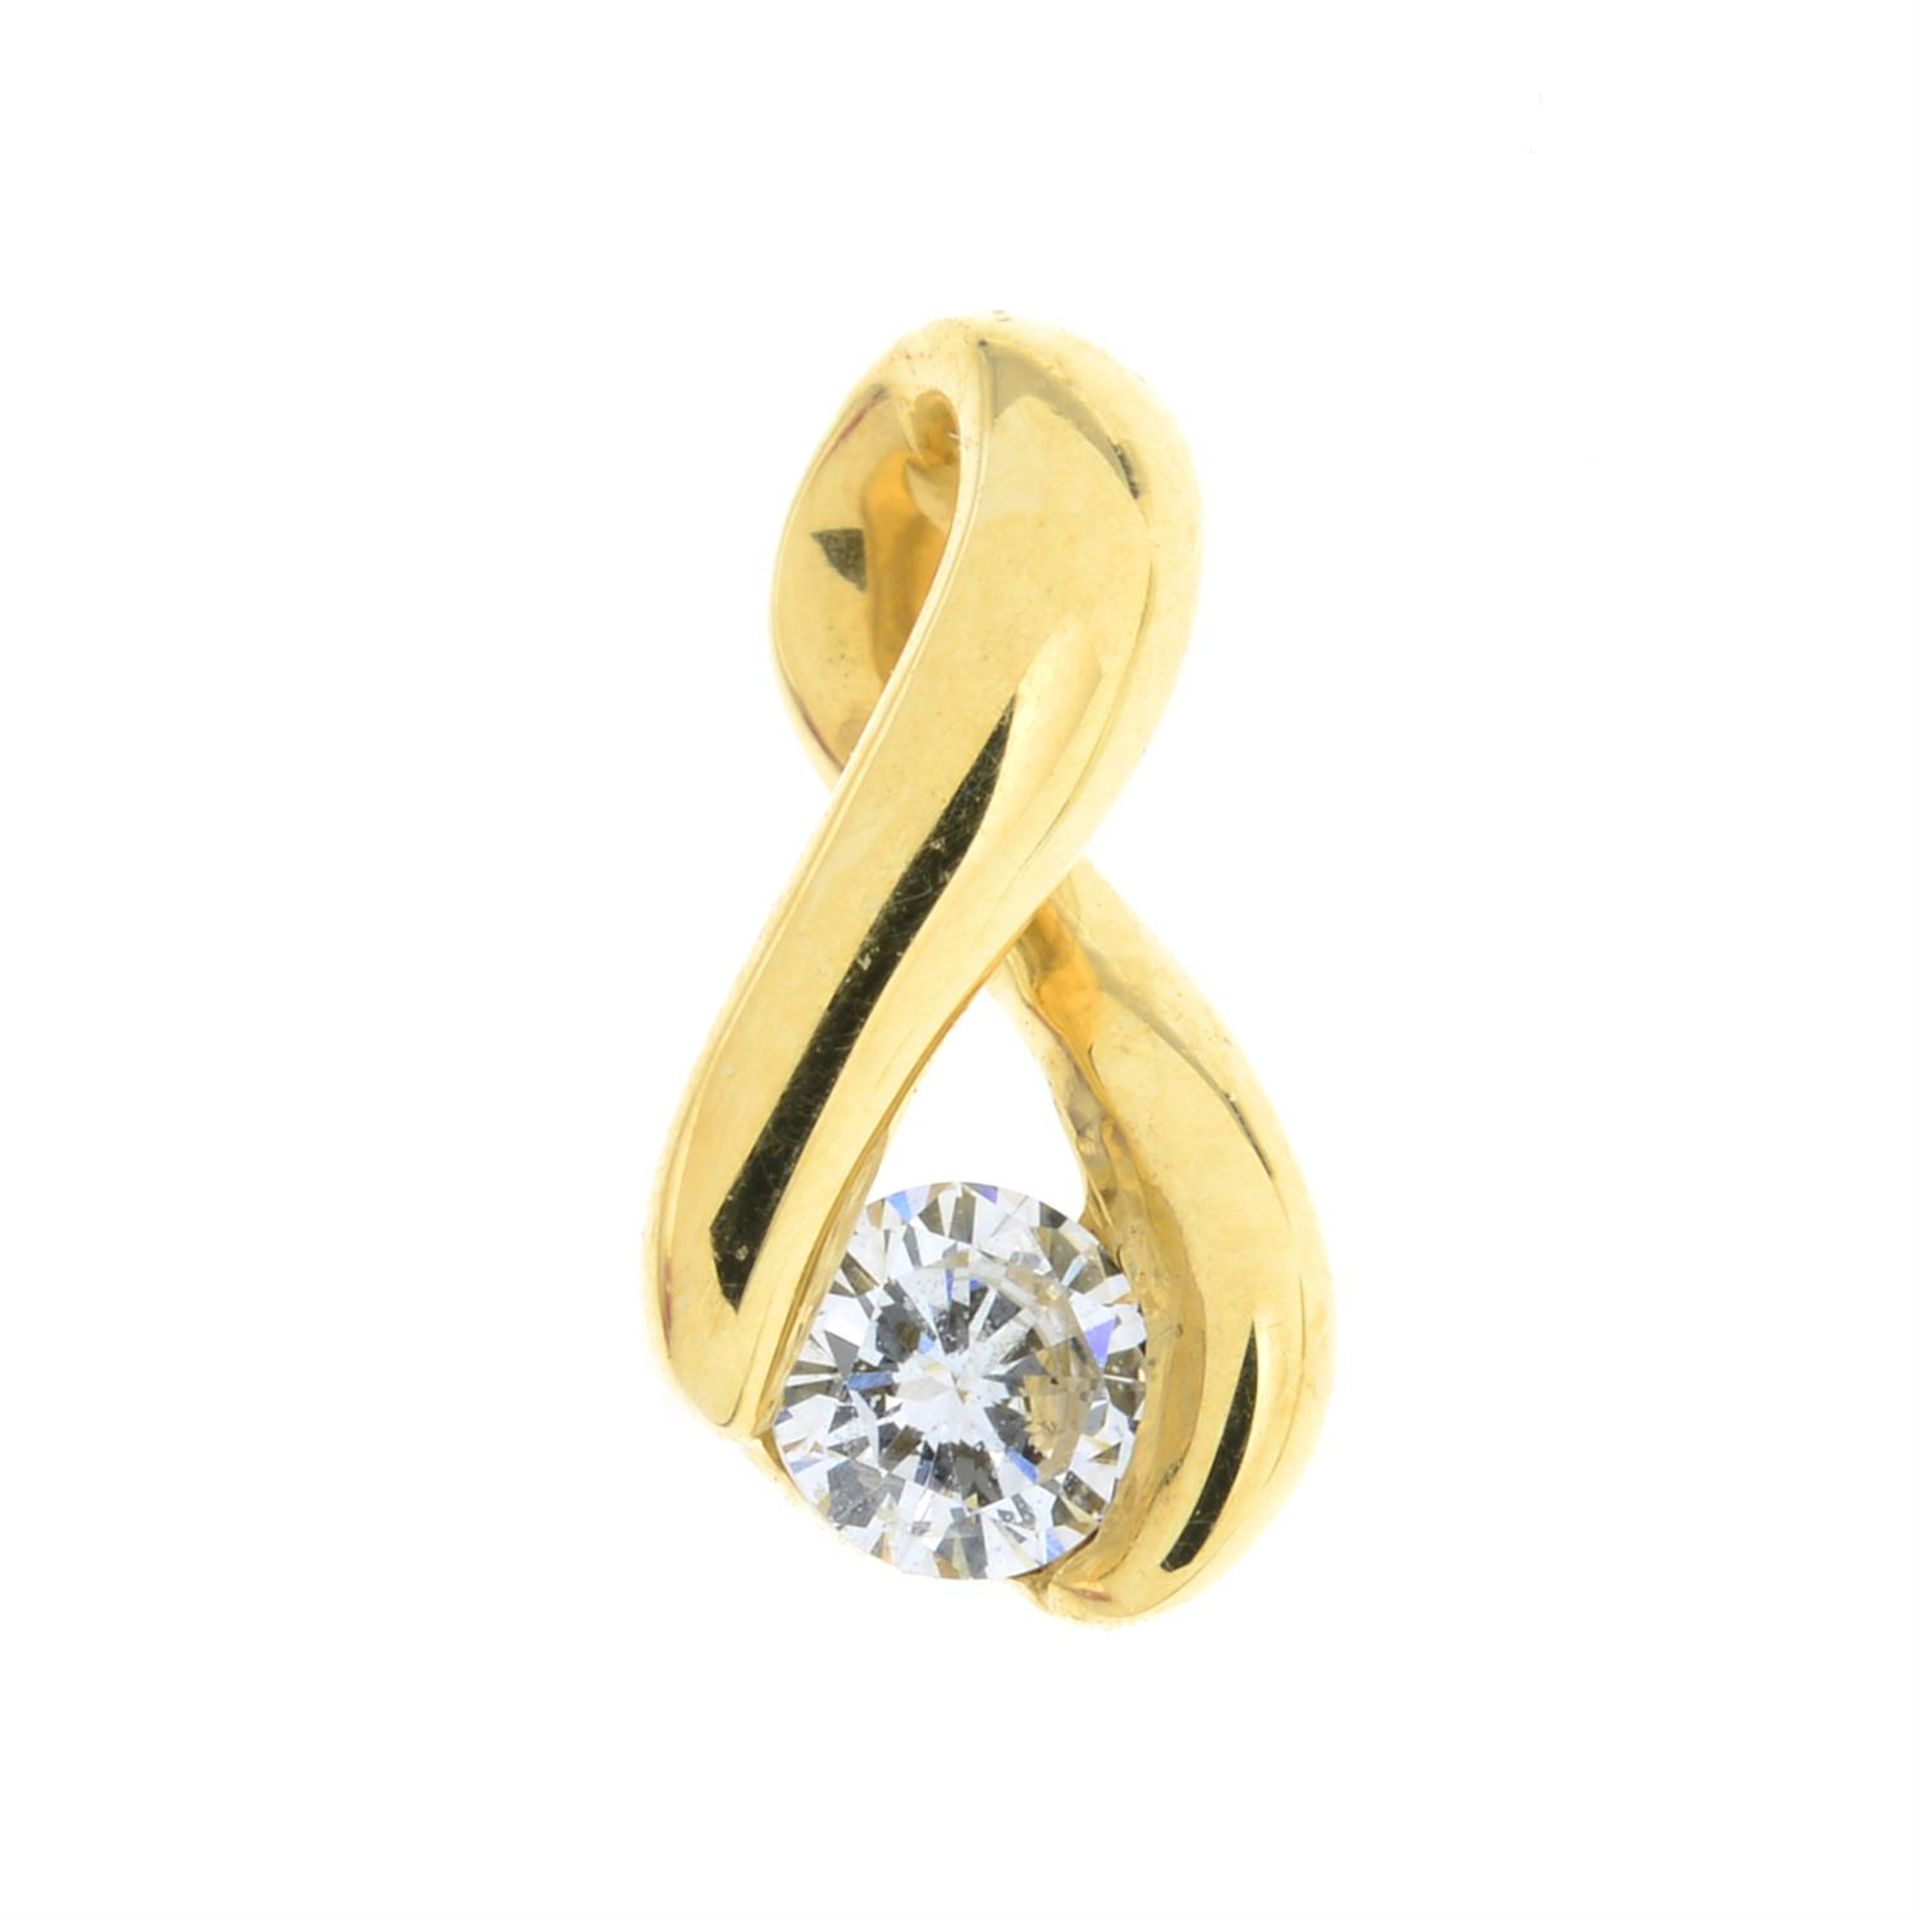 An 18ct gold brilliant-cut diamond pendant.